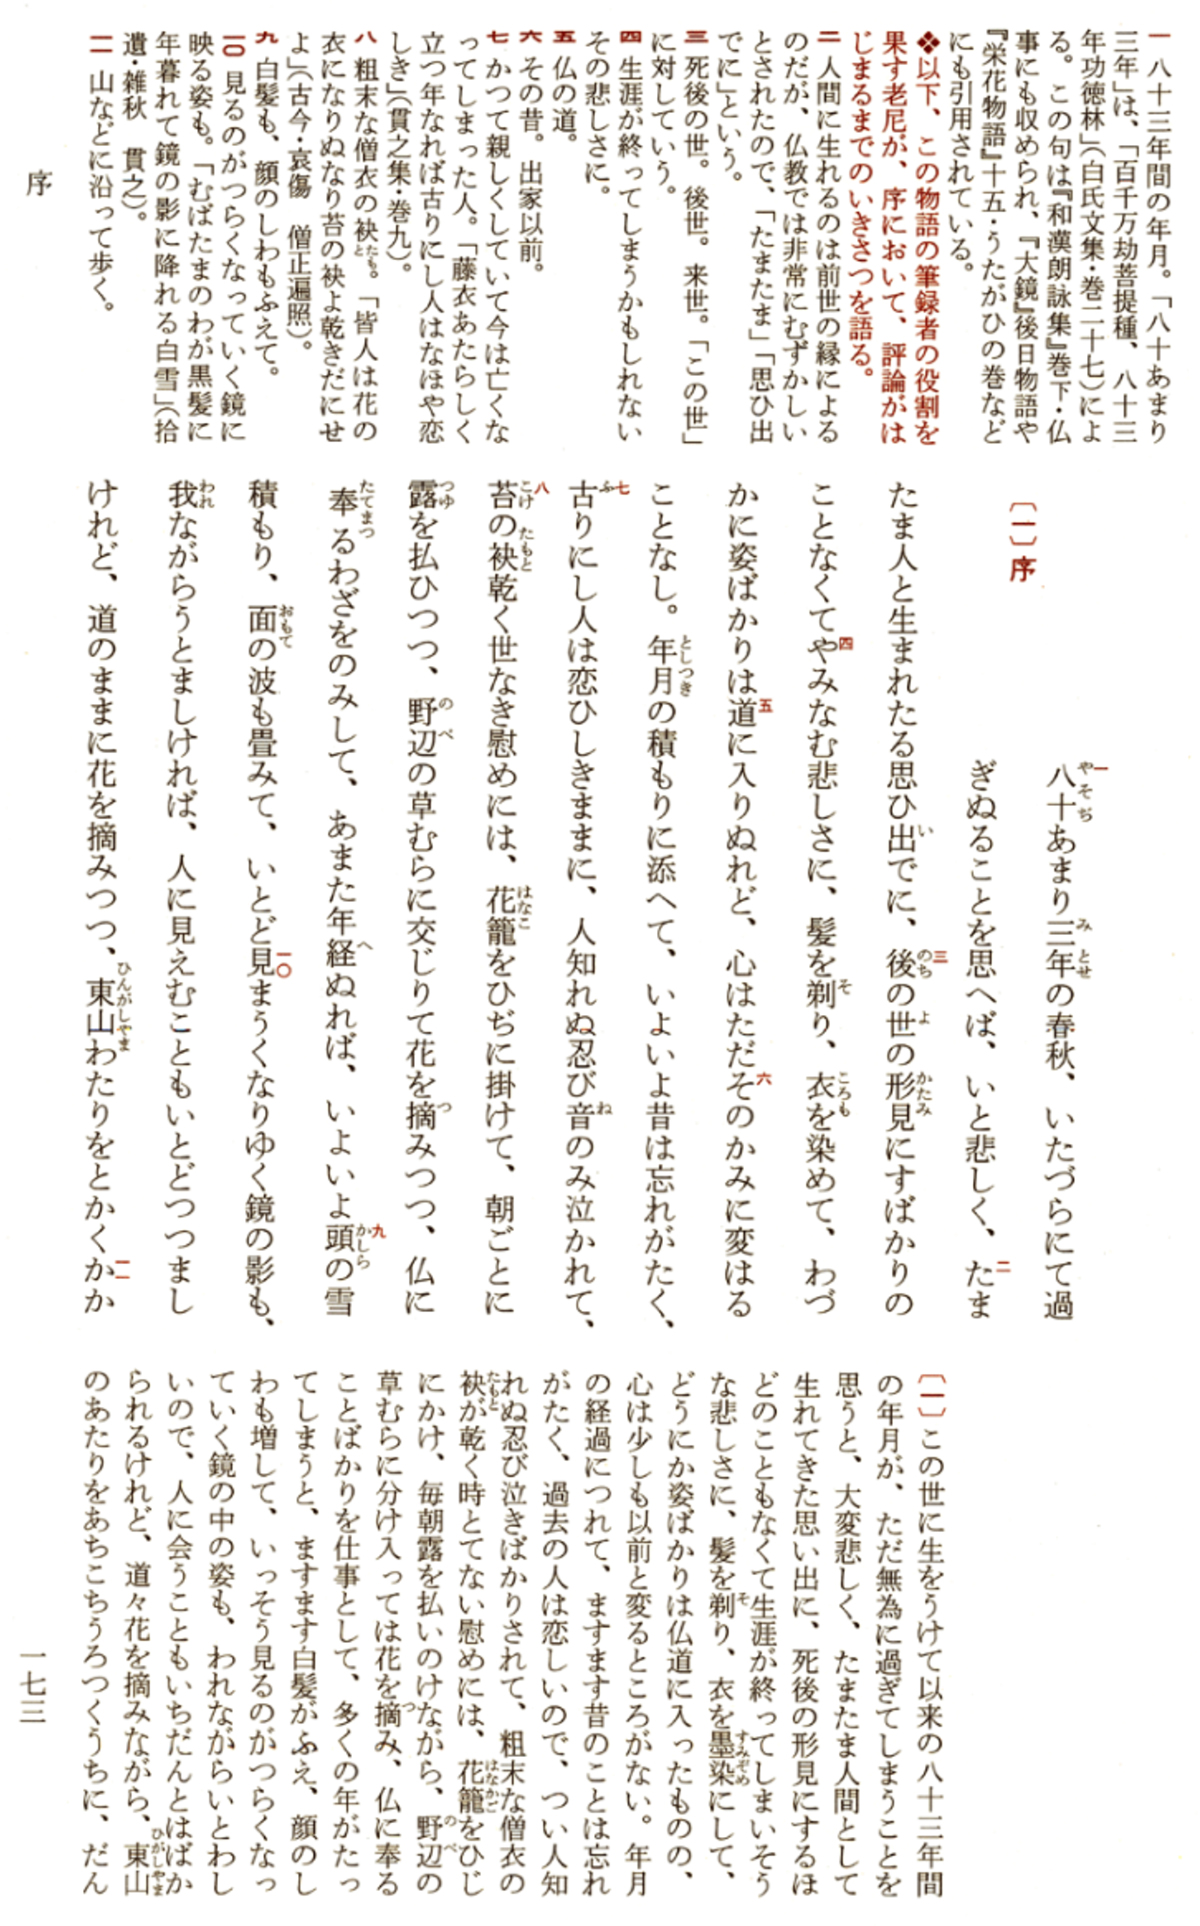 無名草子 日本古典文学全集 日本大百科全書 世界大百科事典 ジャパンナレッジ